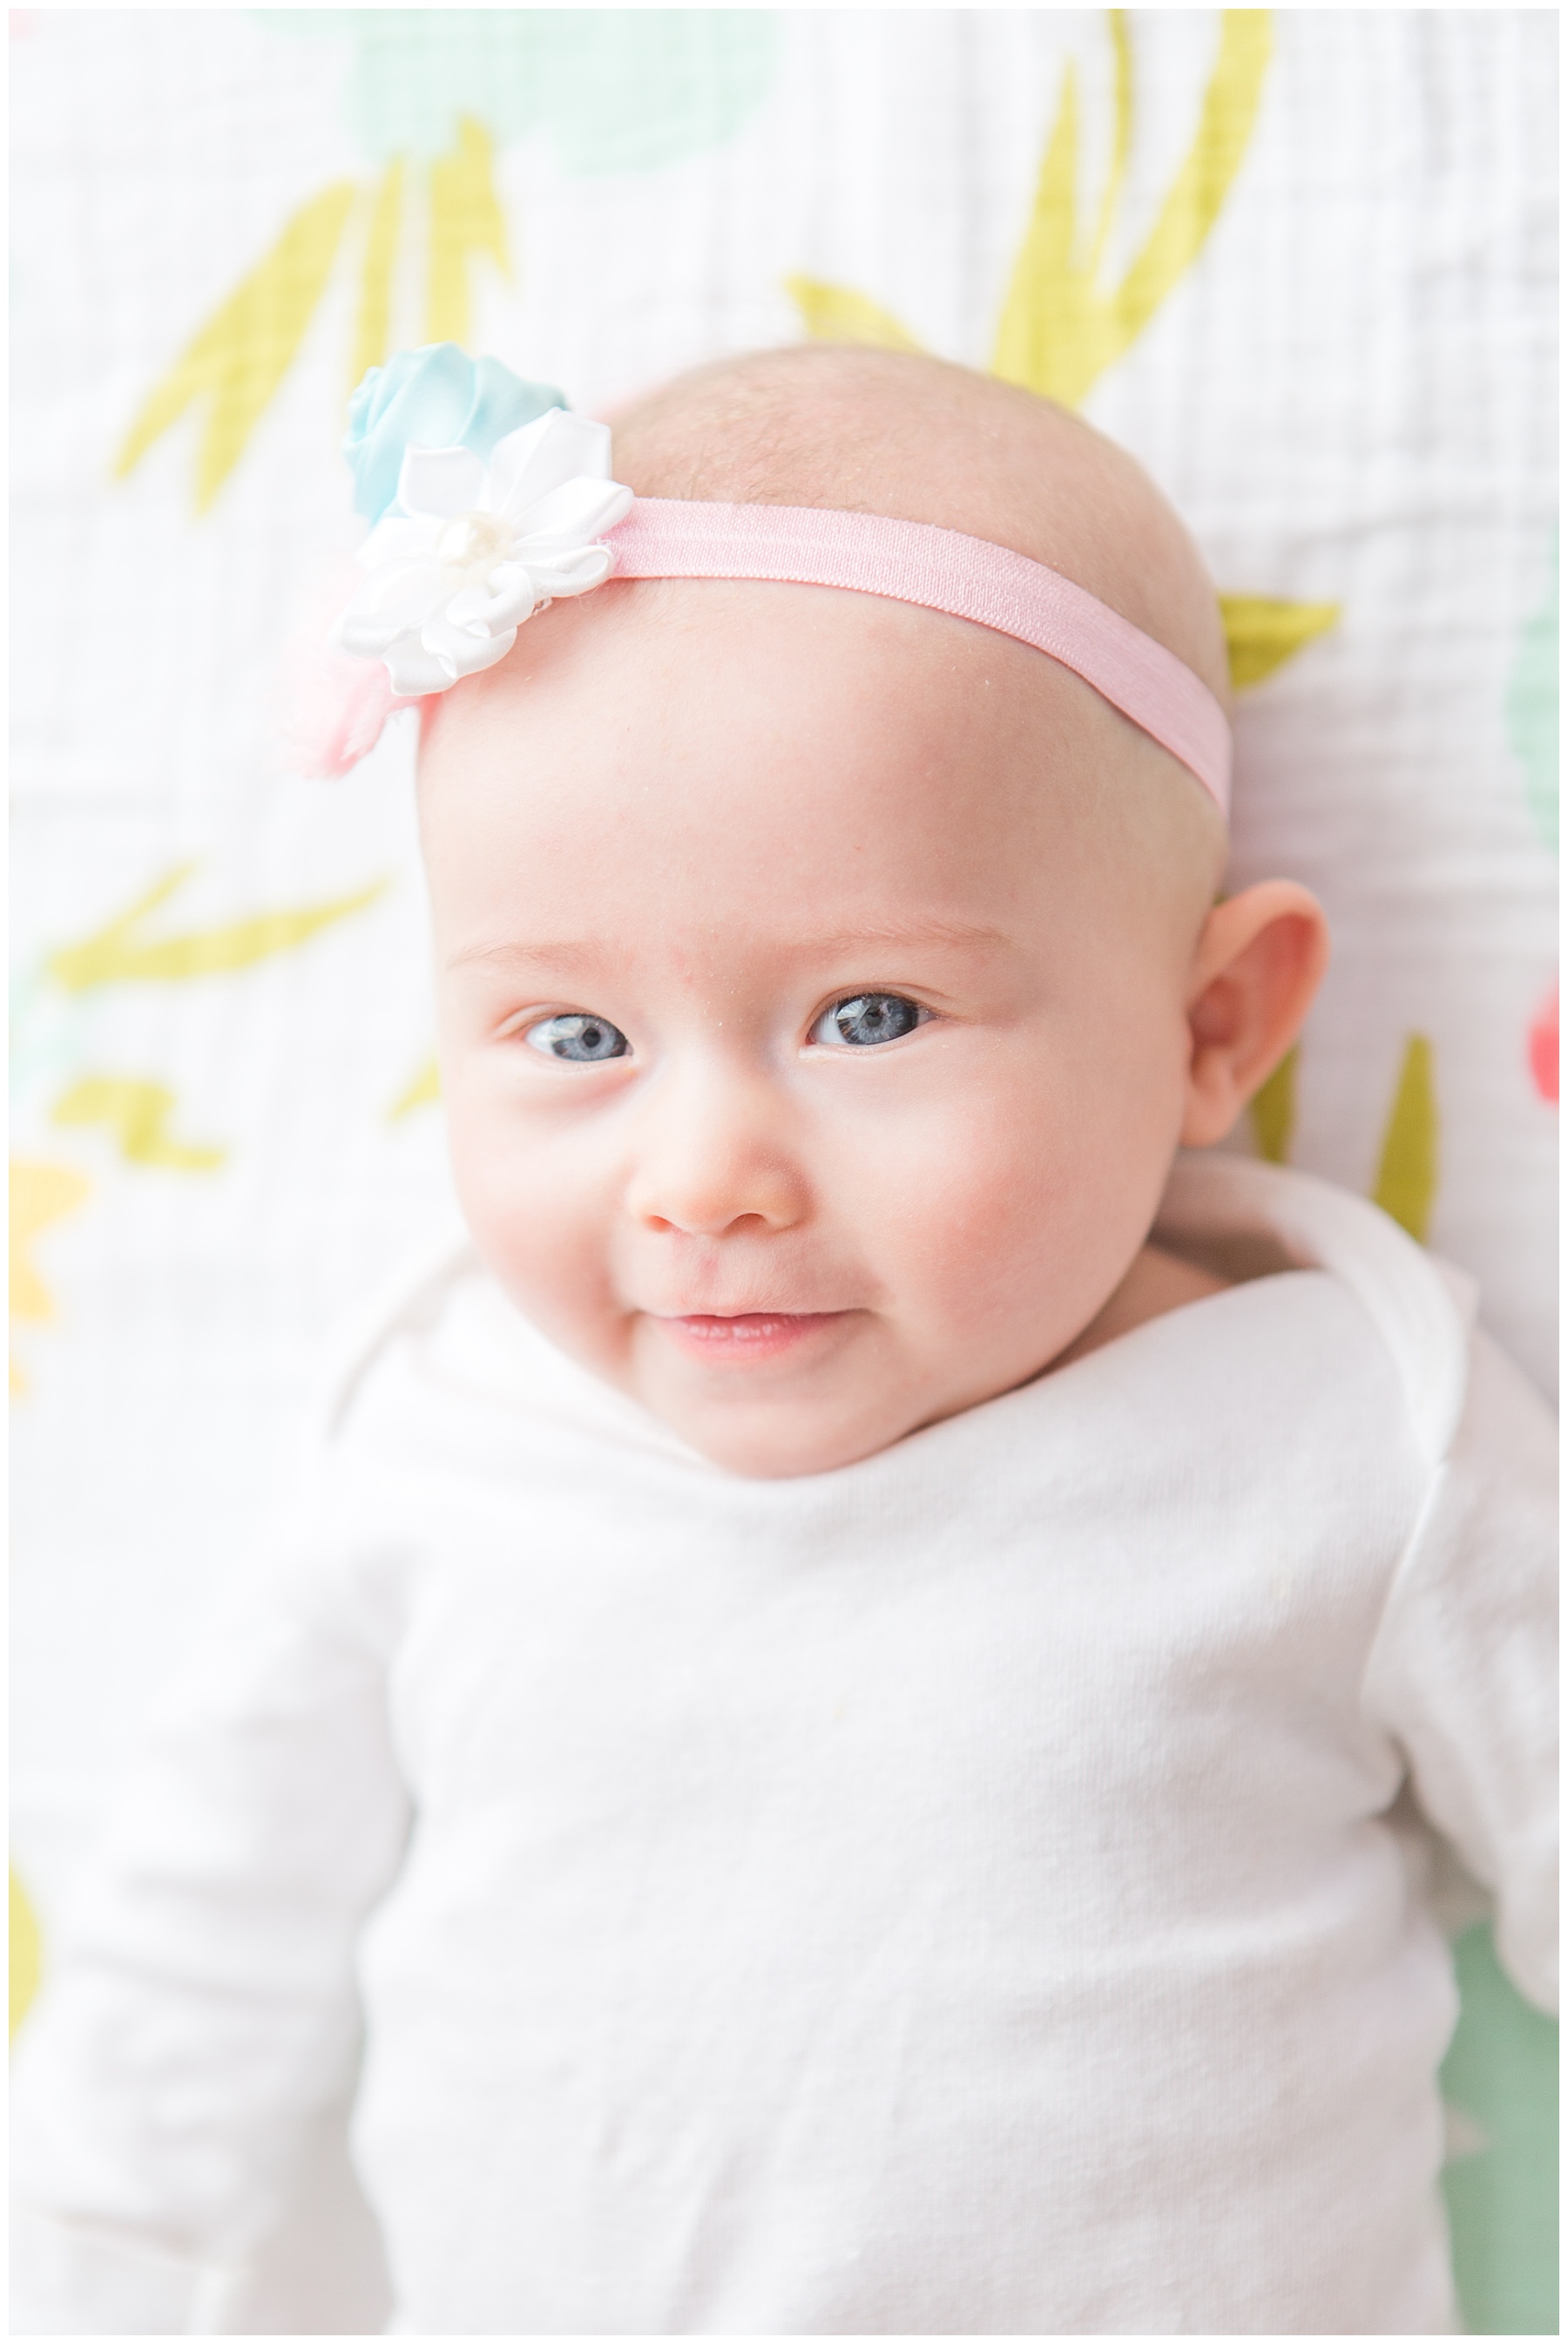 Abigail Joy 4 Months Old, Samantha Ludlow Photography, Syracuse photographer